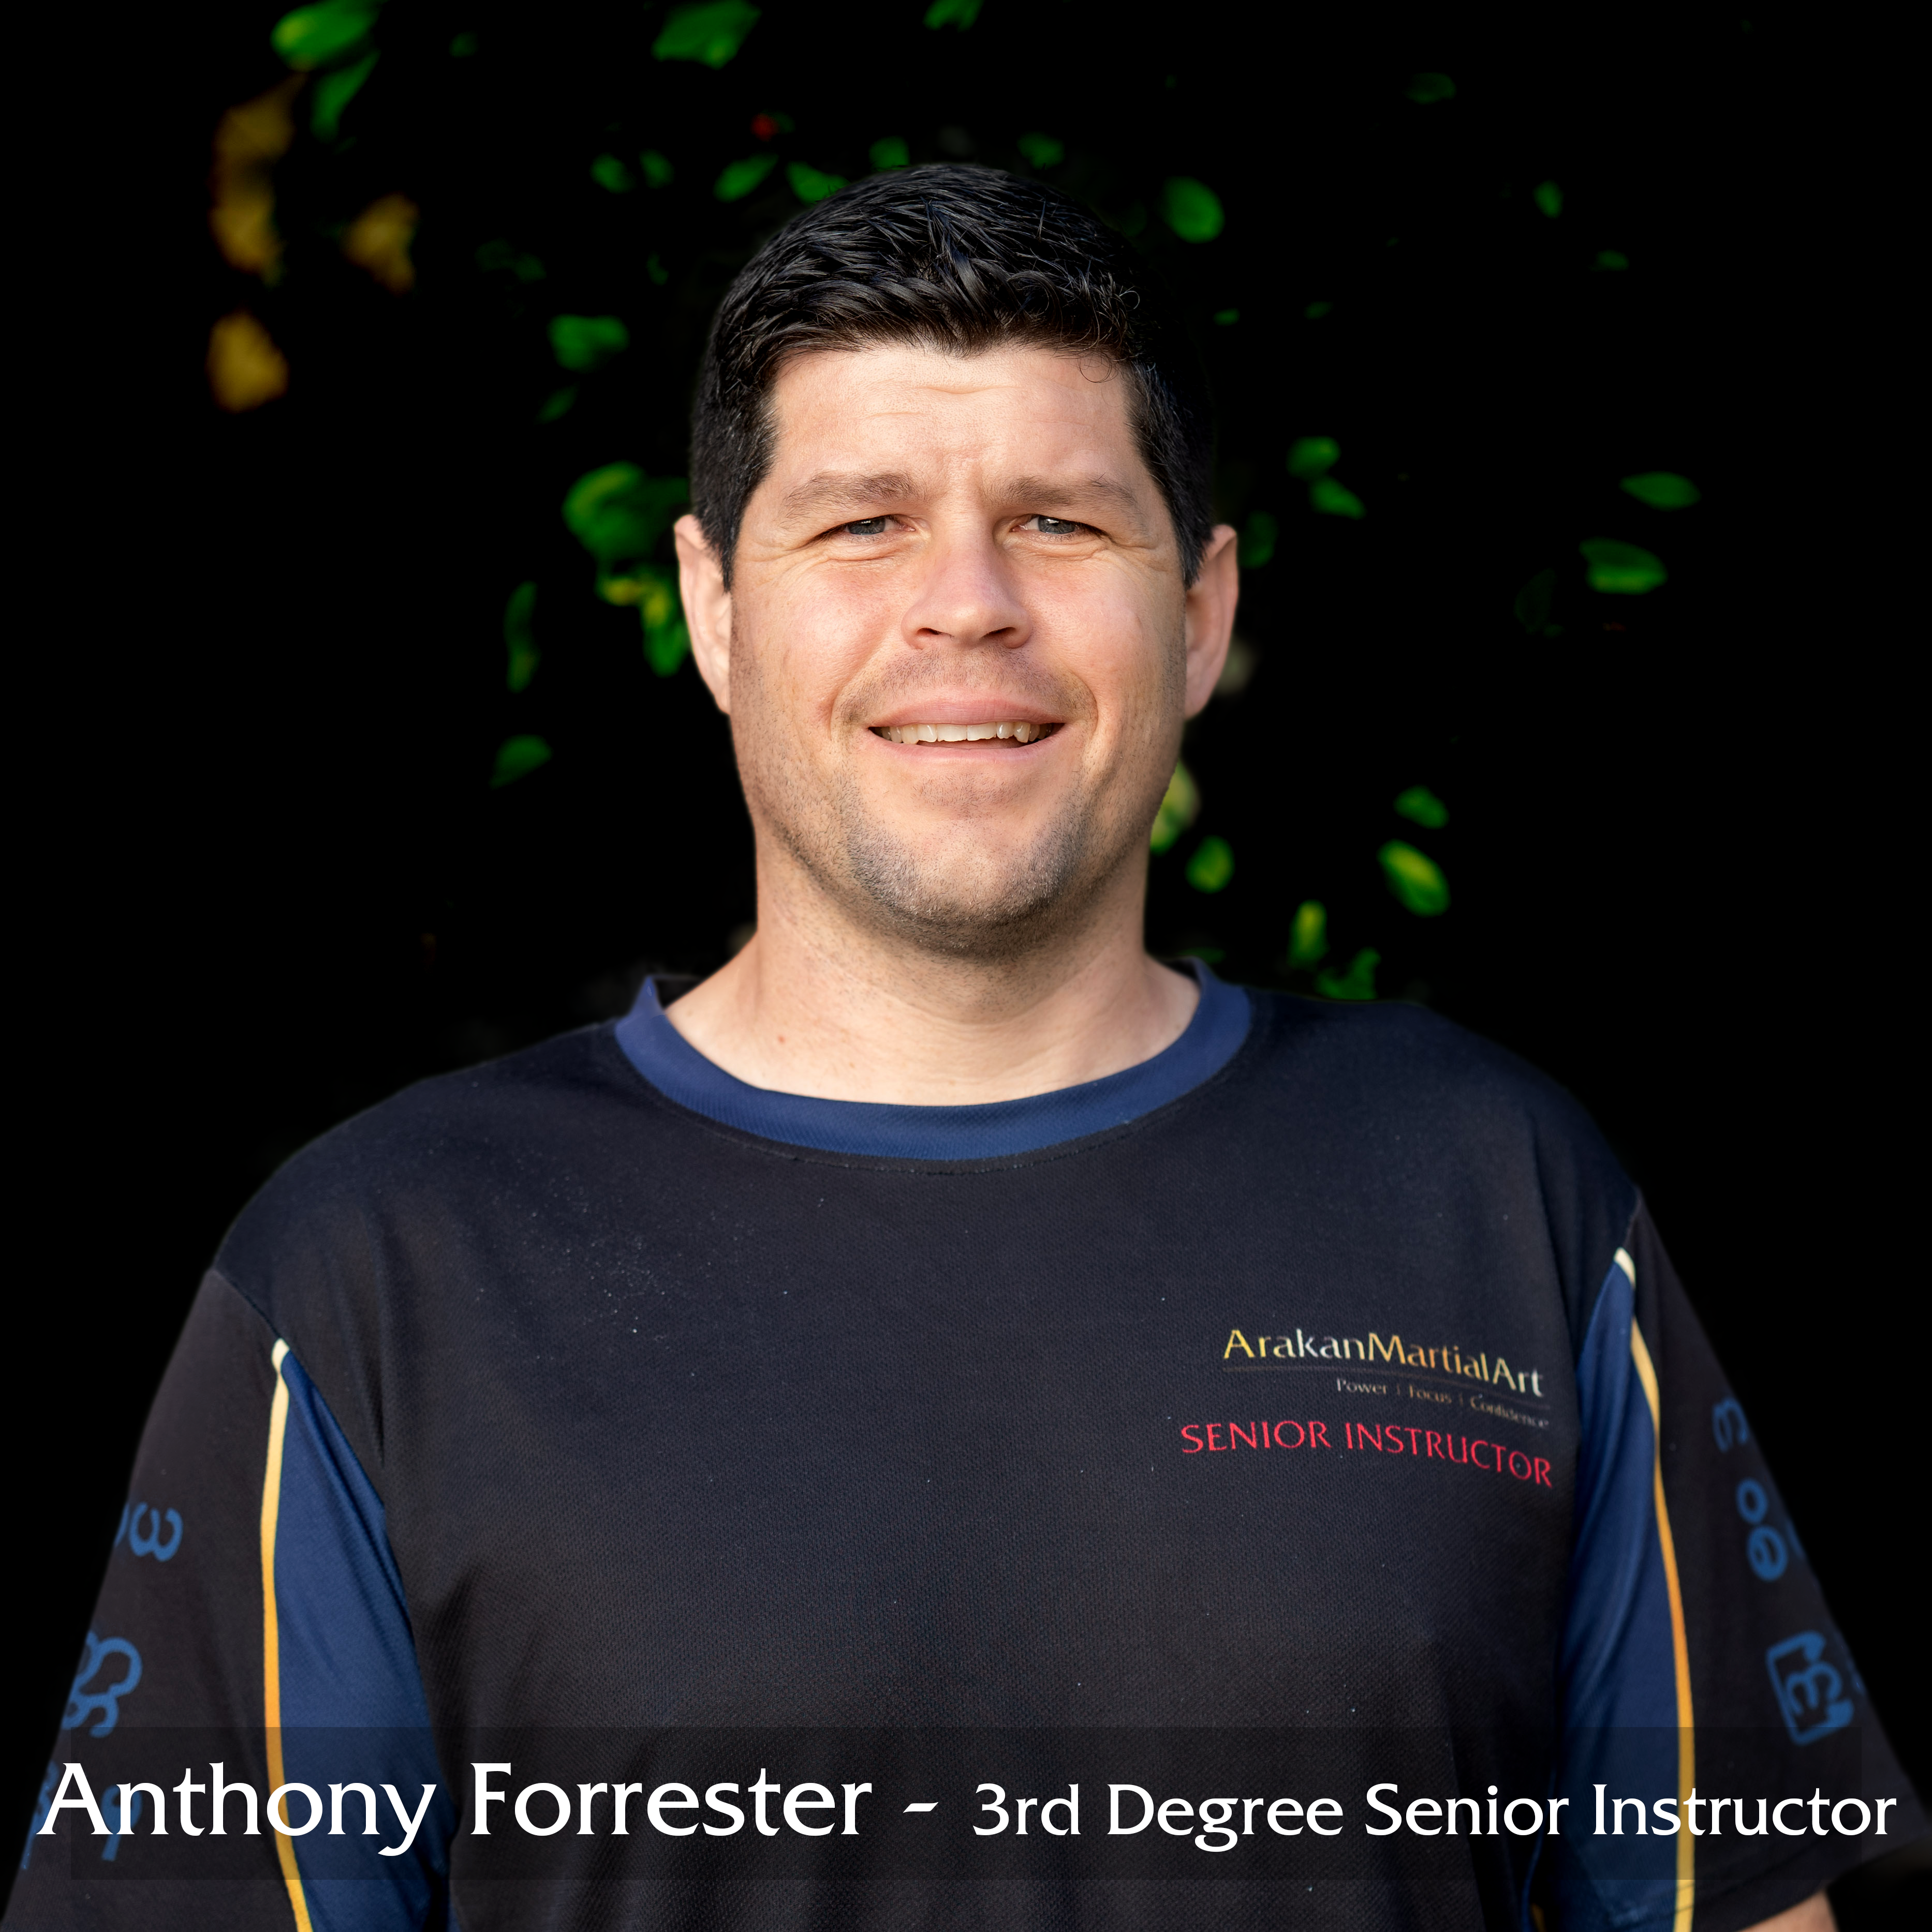 Anthony Forrester